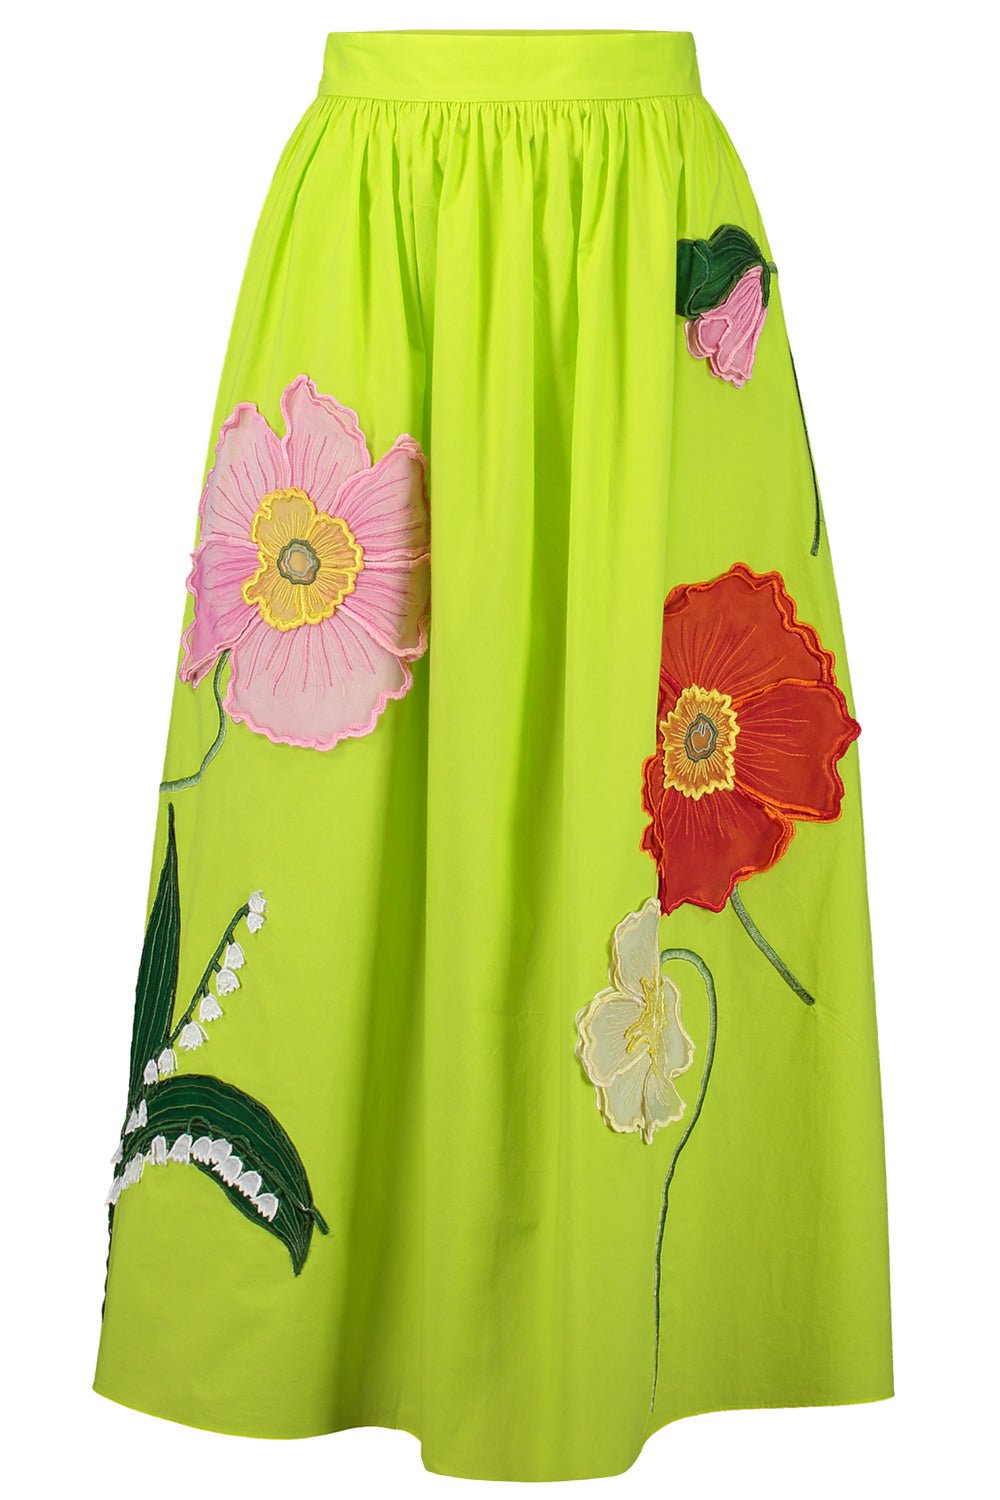 Painted Poppies Embroidered Skirt CLOTHINGSKIRTMIDI OSCAR DE LA RENTA   